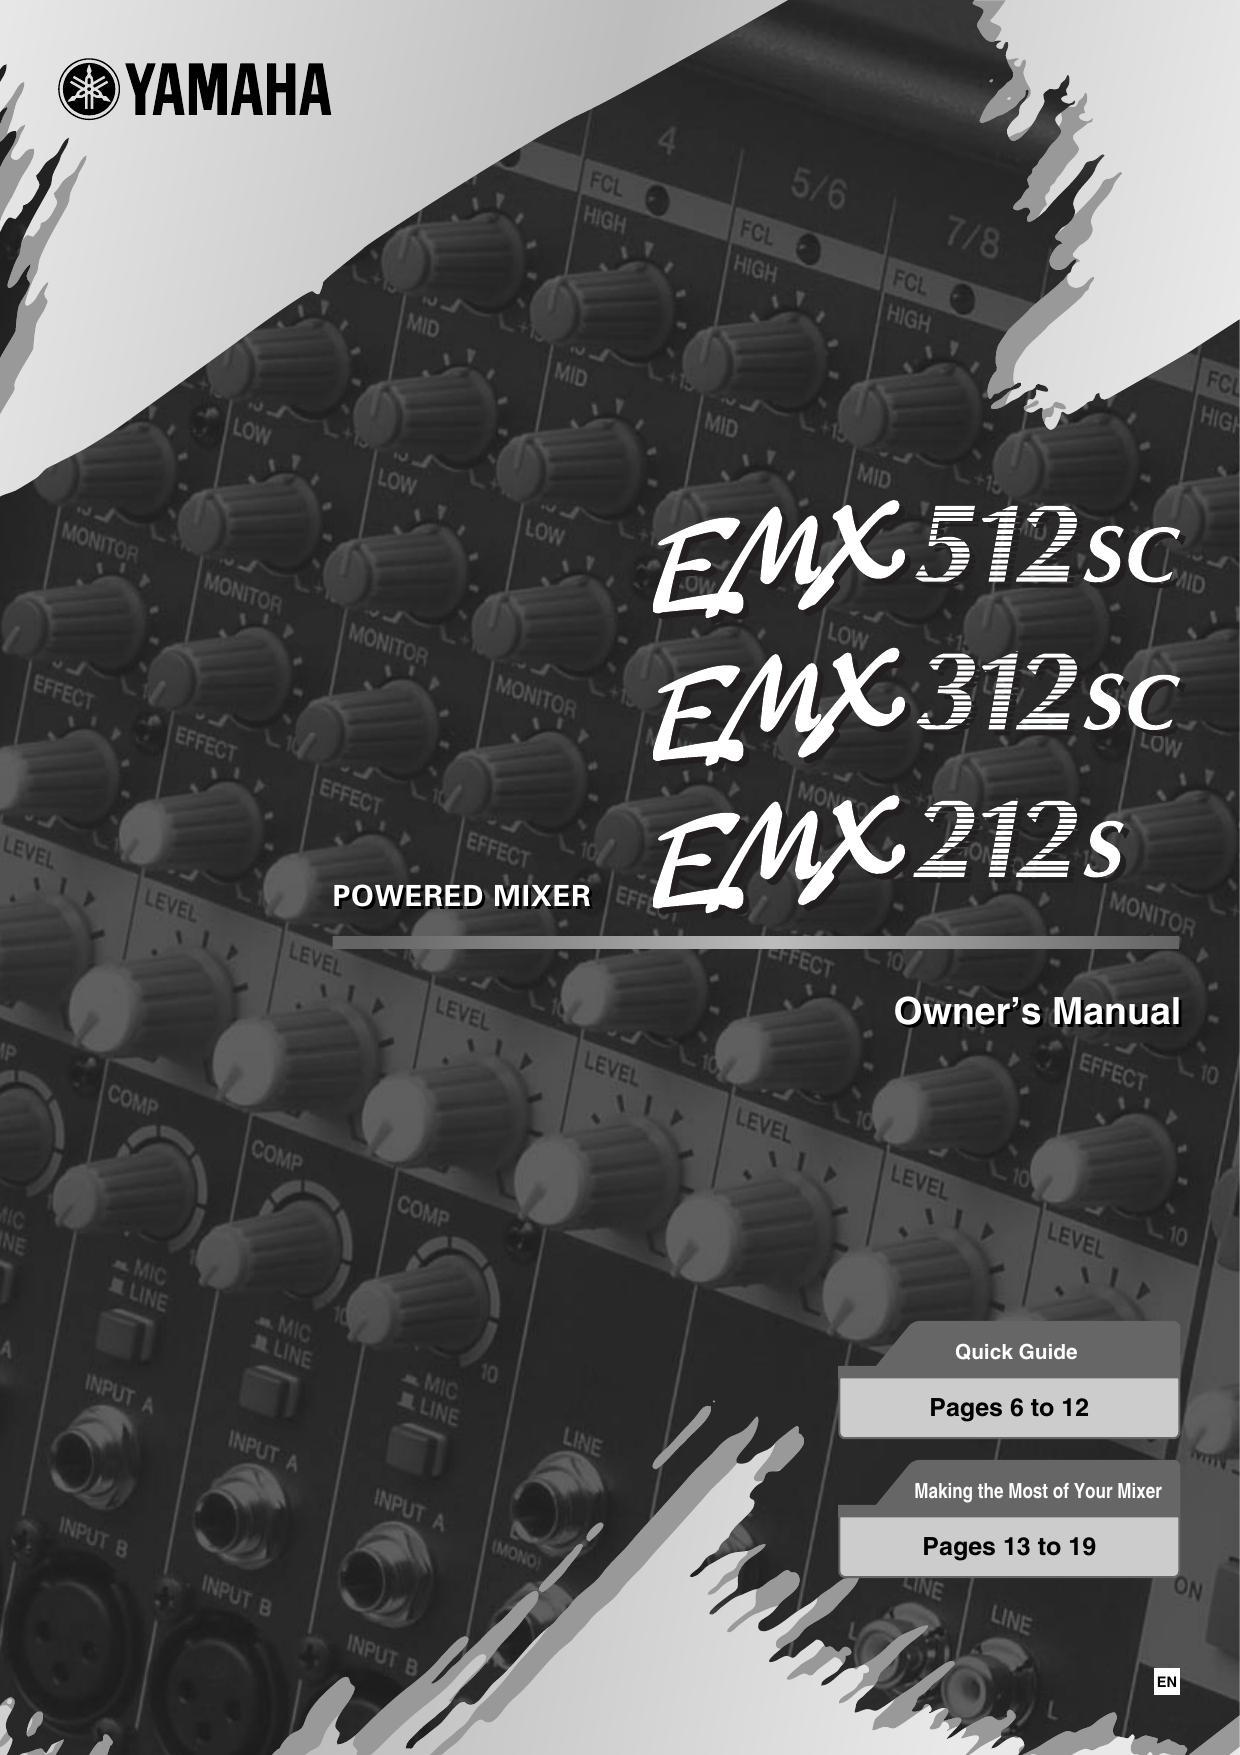 yamaha-emx512sc-emx312sc-or-emx212sc-power-mixer-owners-manual.pdf